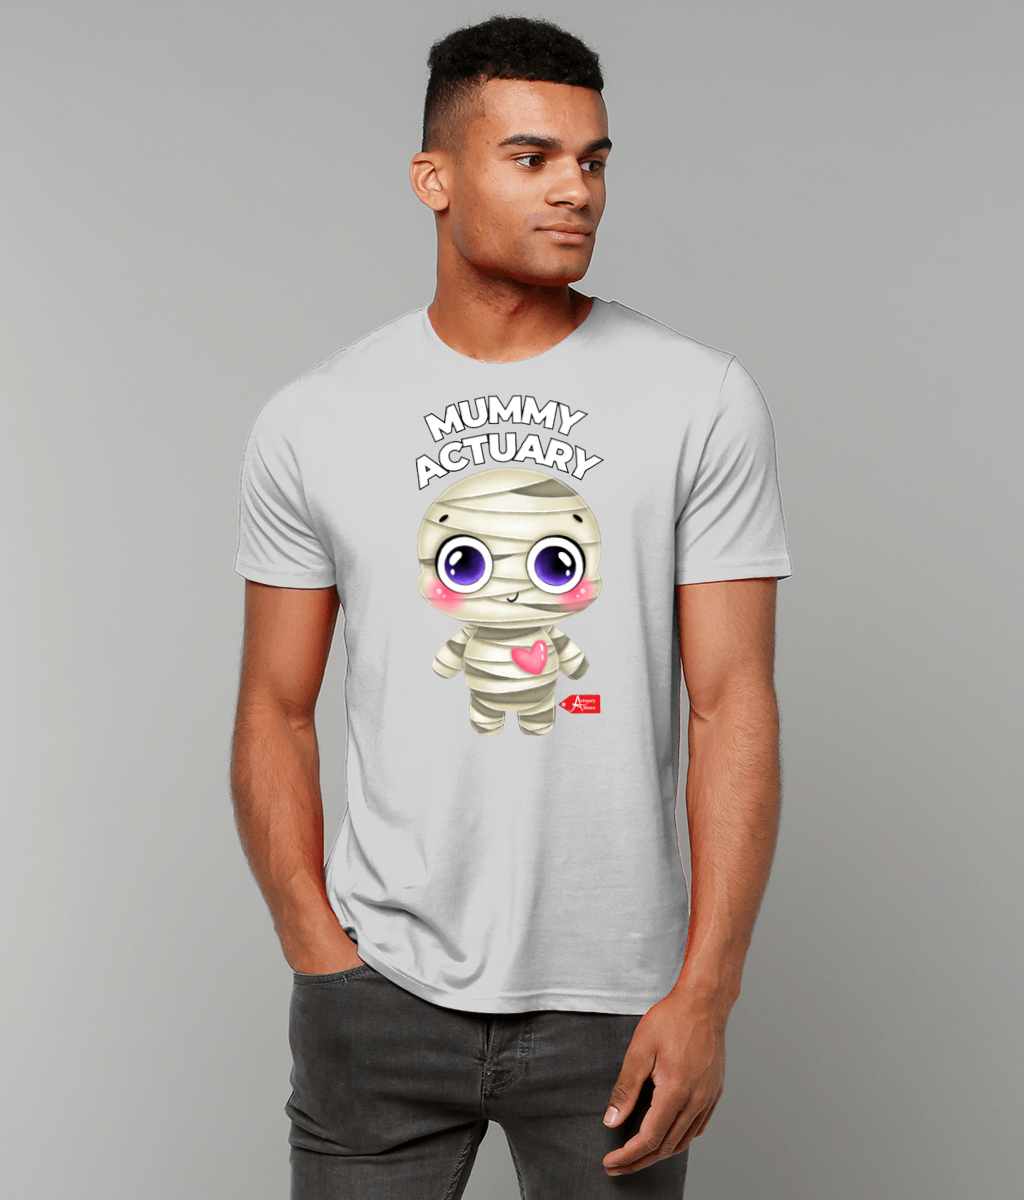 Mummy Actuary Cute (Black, Grey, Pink, White Variants) T-shirt